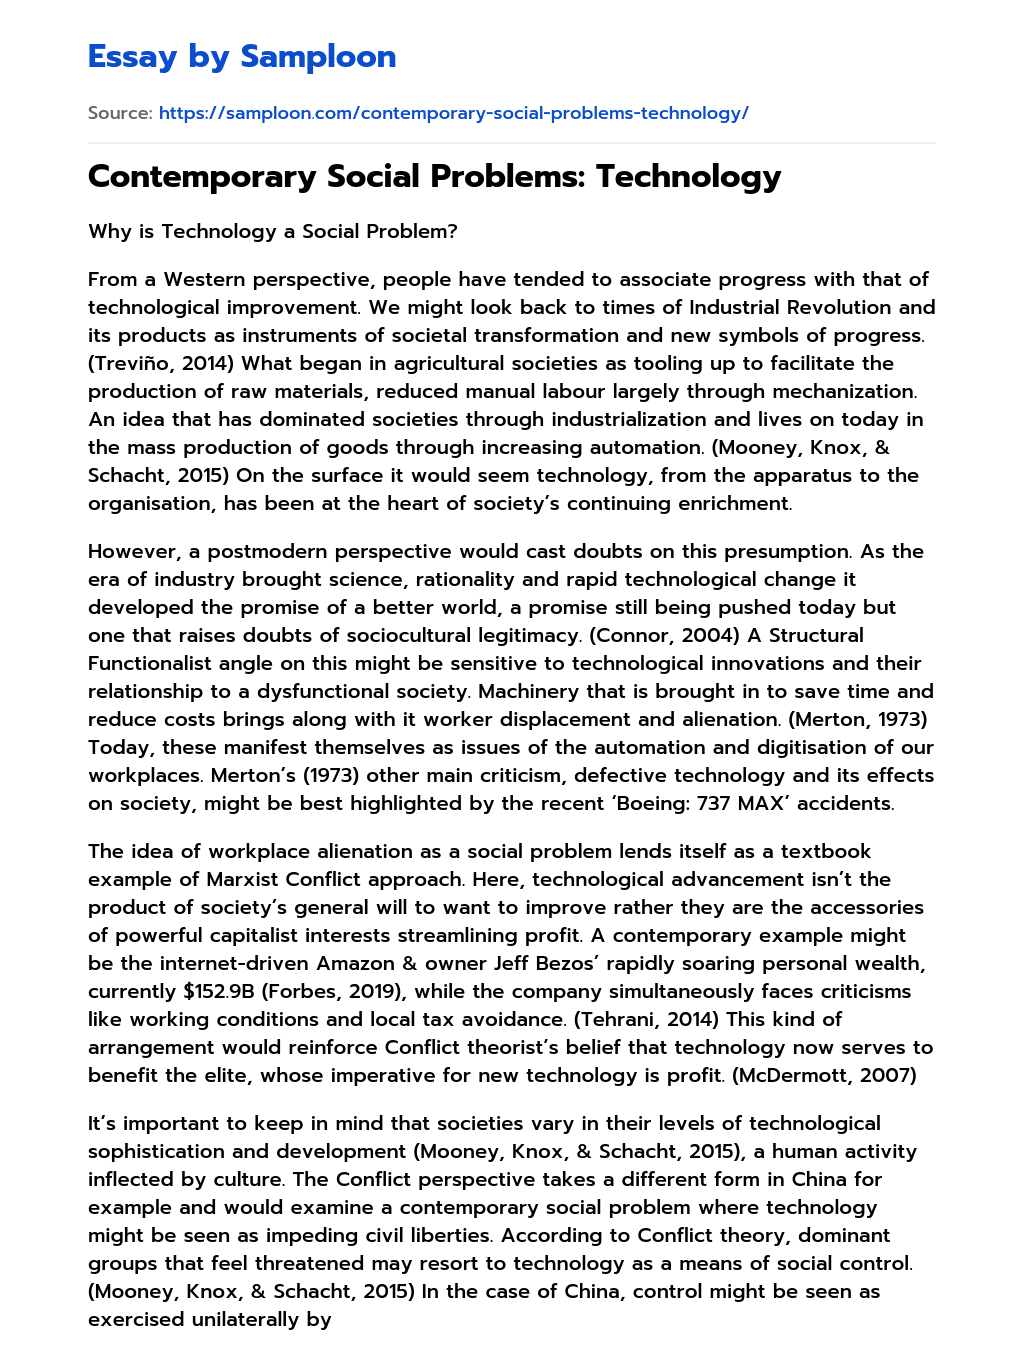 Contemporary Social Problems: Technology essay